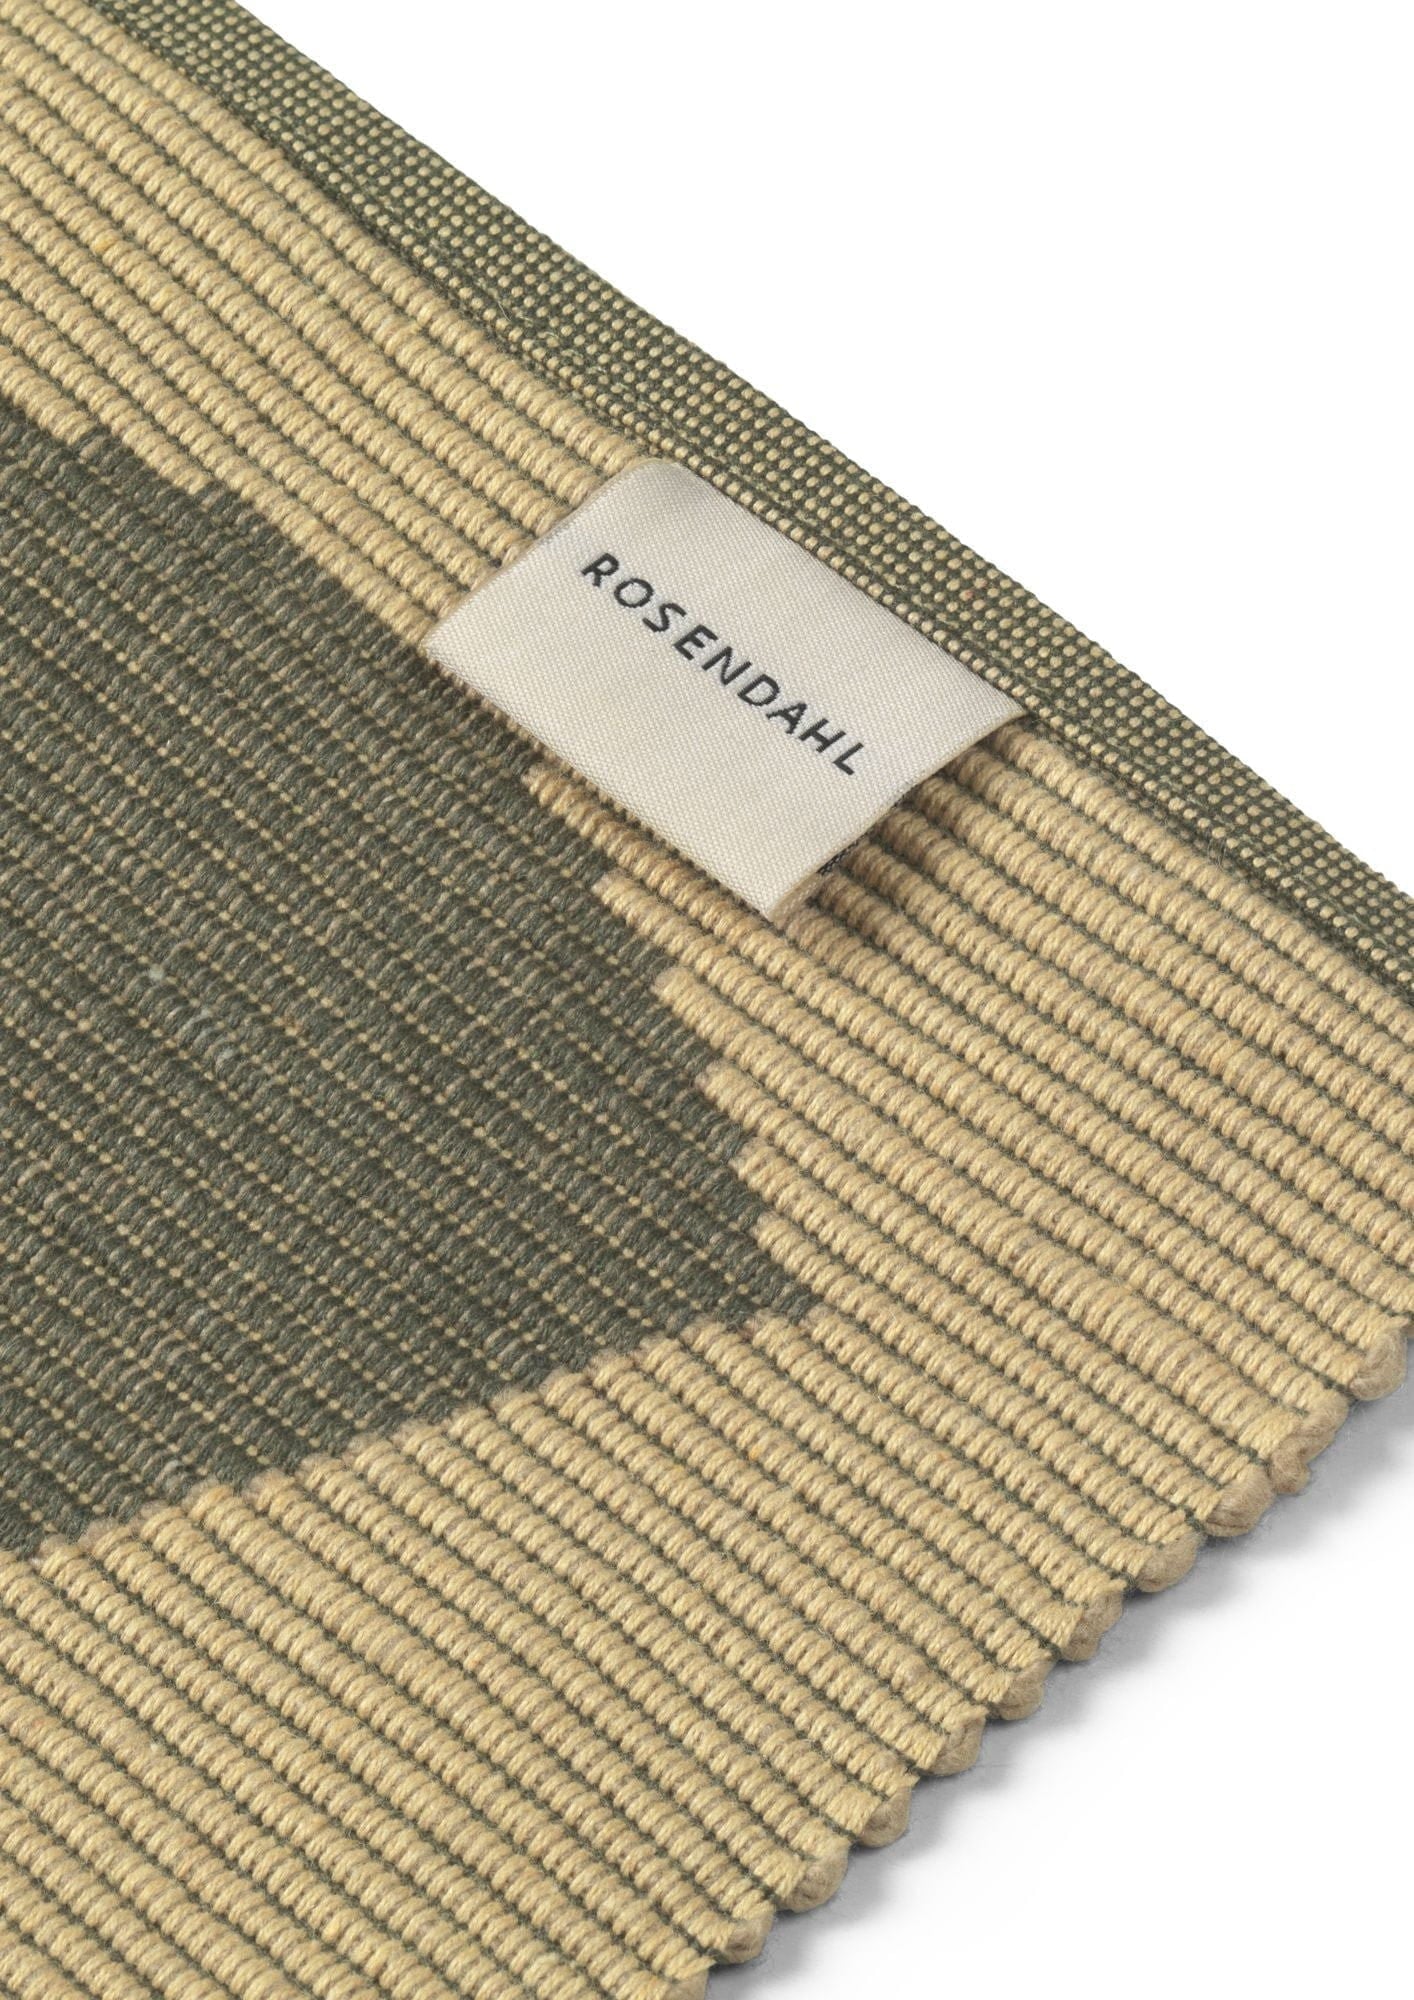 Rosendahl Rosendahl Textiles Outdoor Natura 43x30 cm, grün